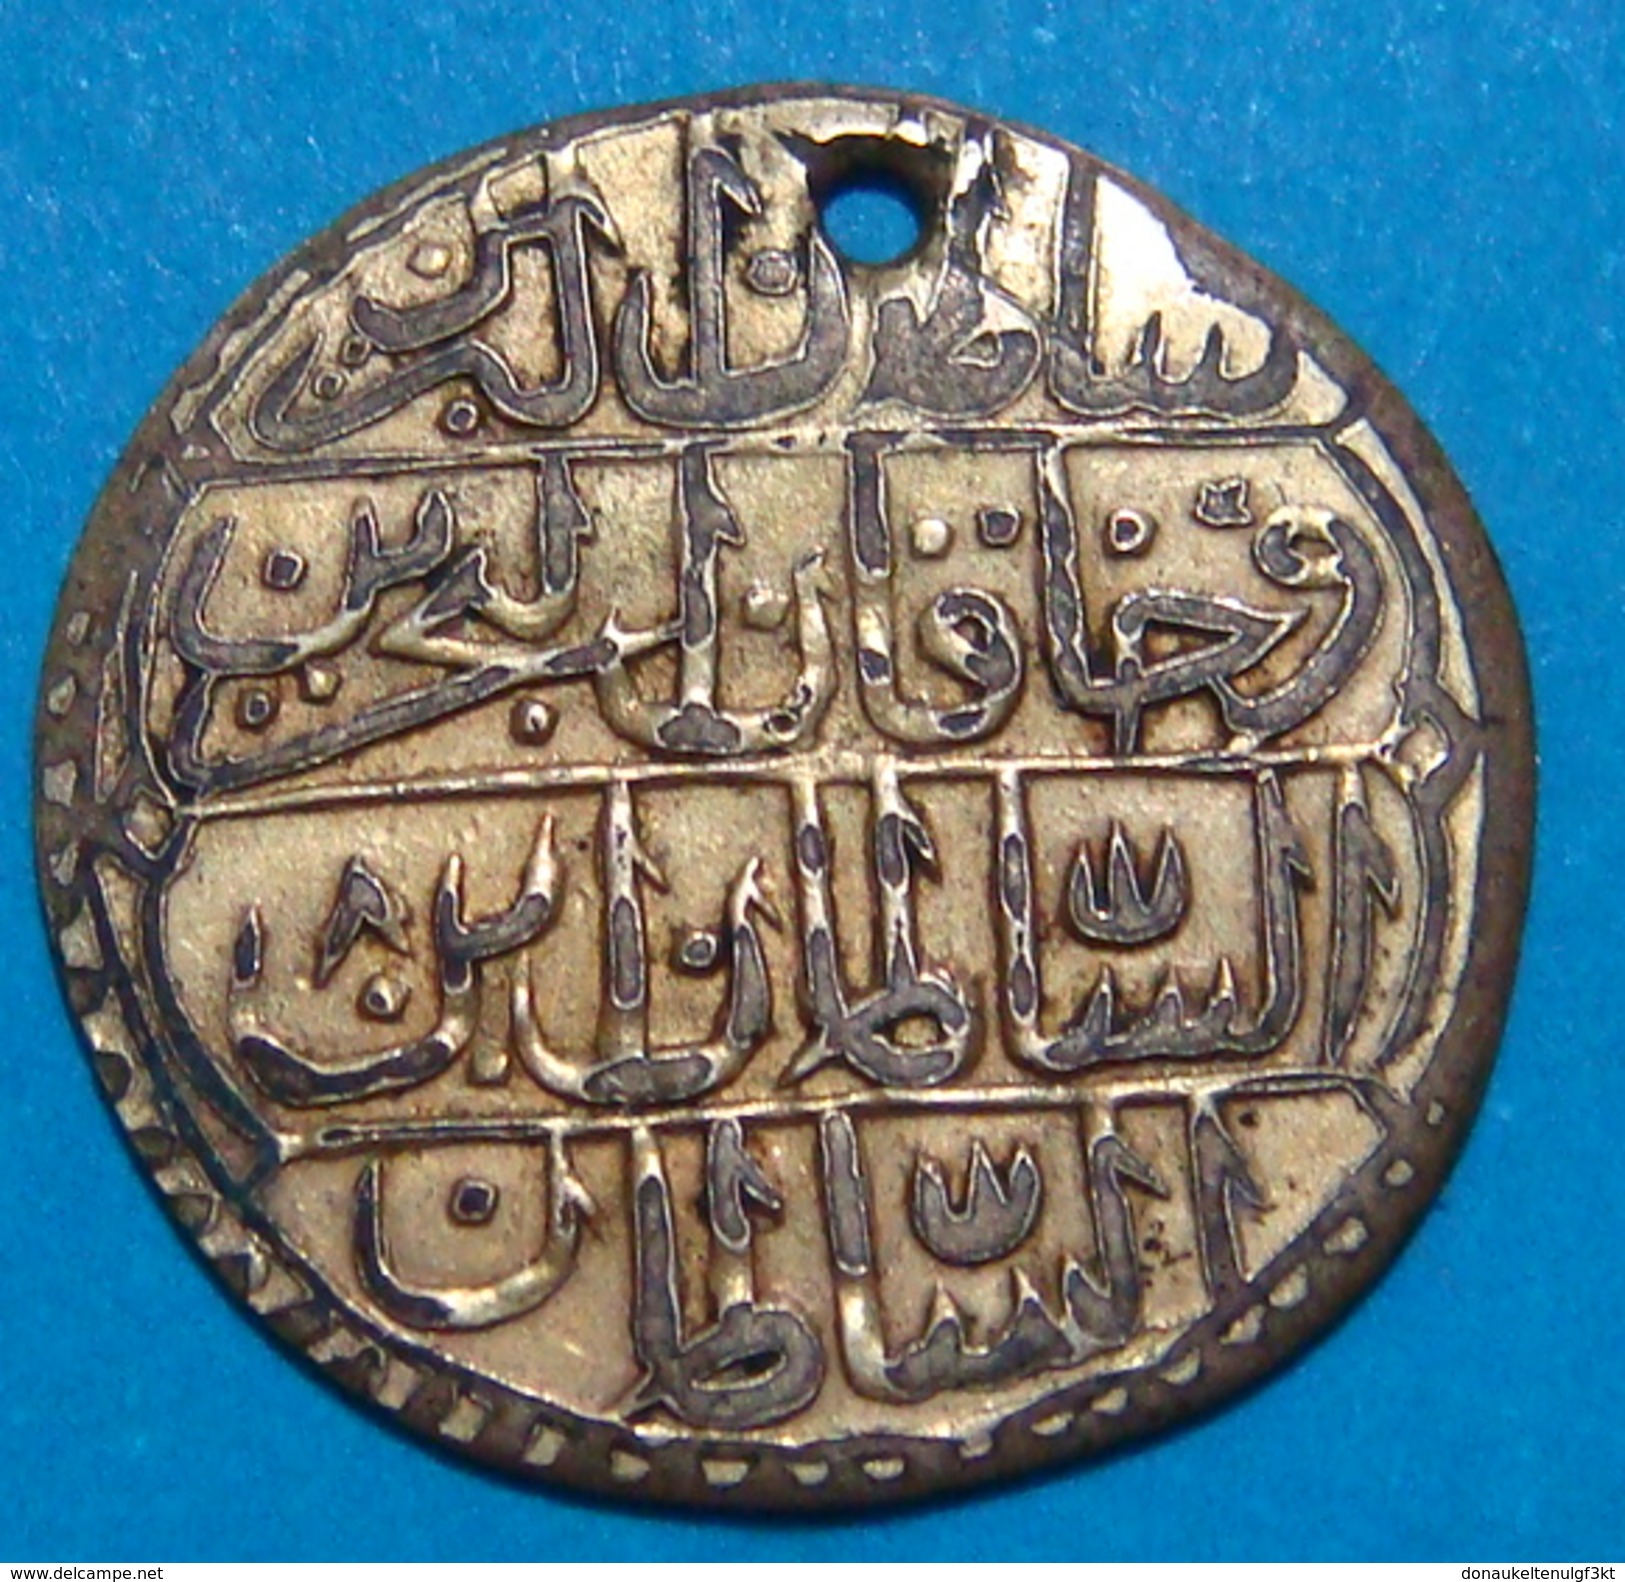 TURKEY OTTOMAN ZERI MAHBUB 1203 Year 8, OFFICIAL RESTRIKE OR PROBE, VERY RARE OR UNIQUE, 1.59 Gr. - Turquie